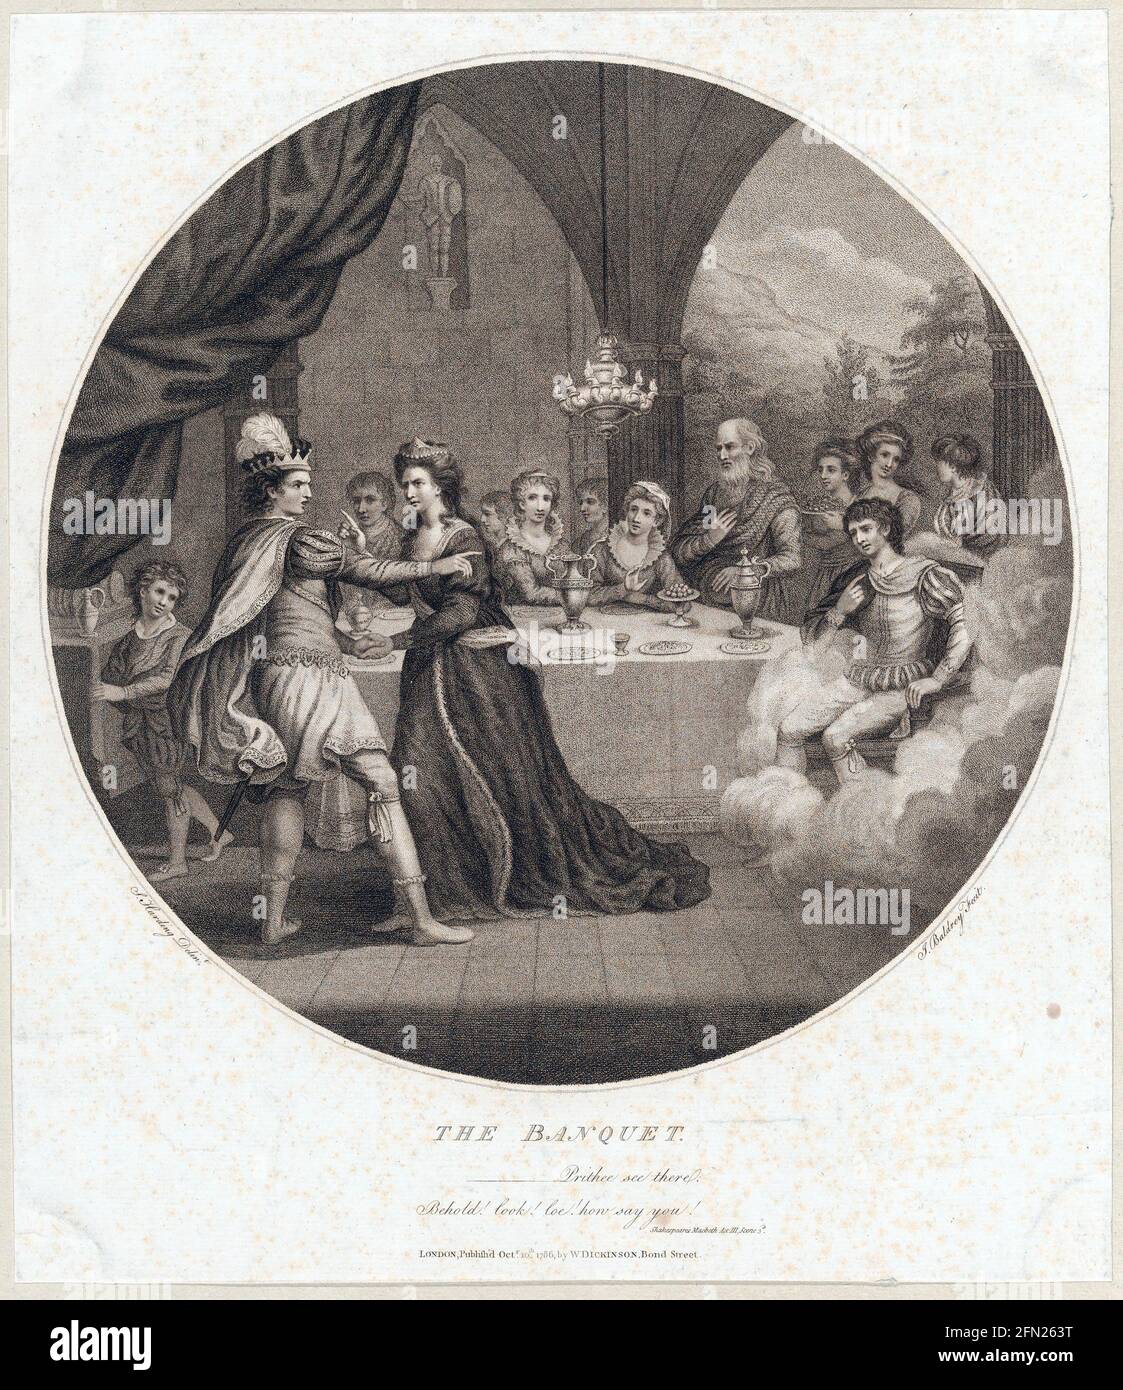 The Banquet (Shakespeare, Macbeth, Act 3, Scene 3) - October 10, 1786 - by John Baldrey Stock Photo